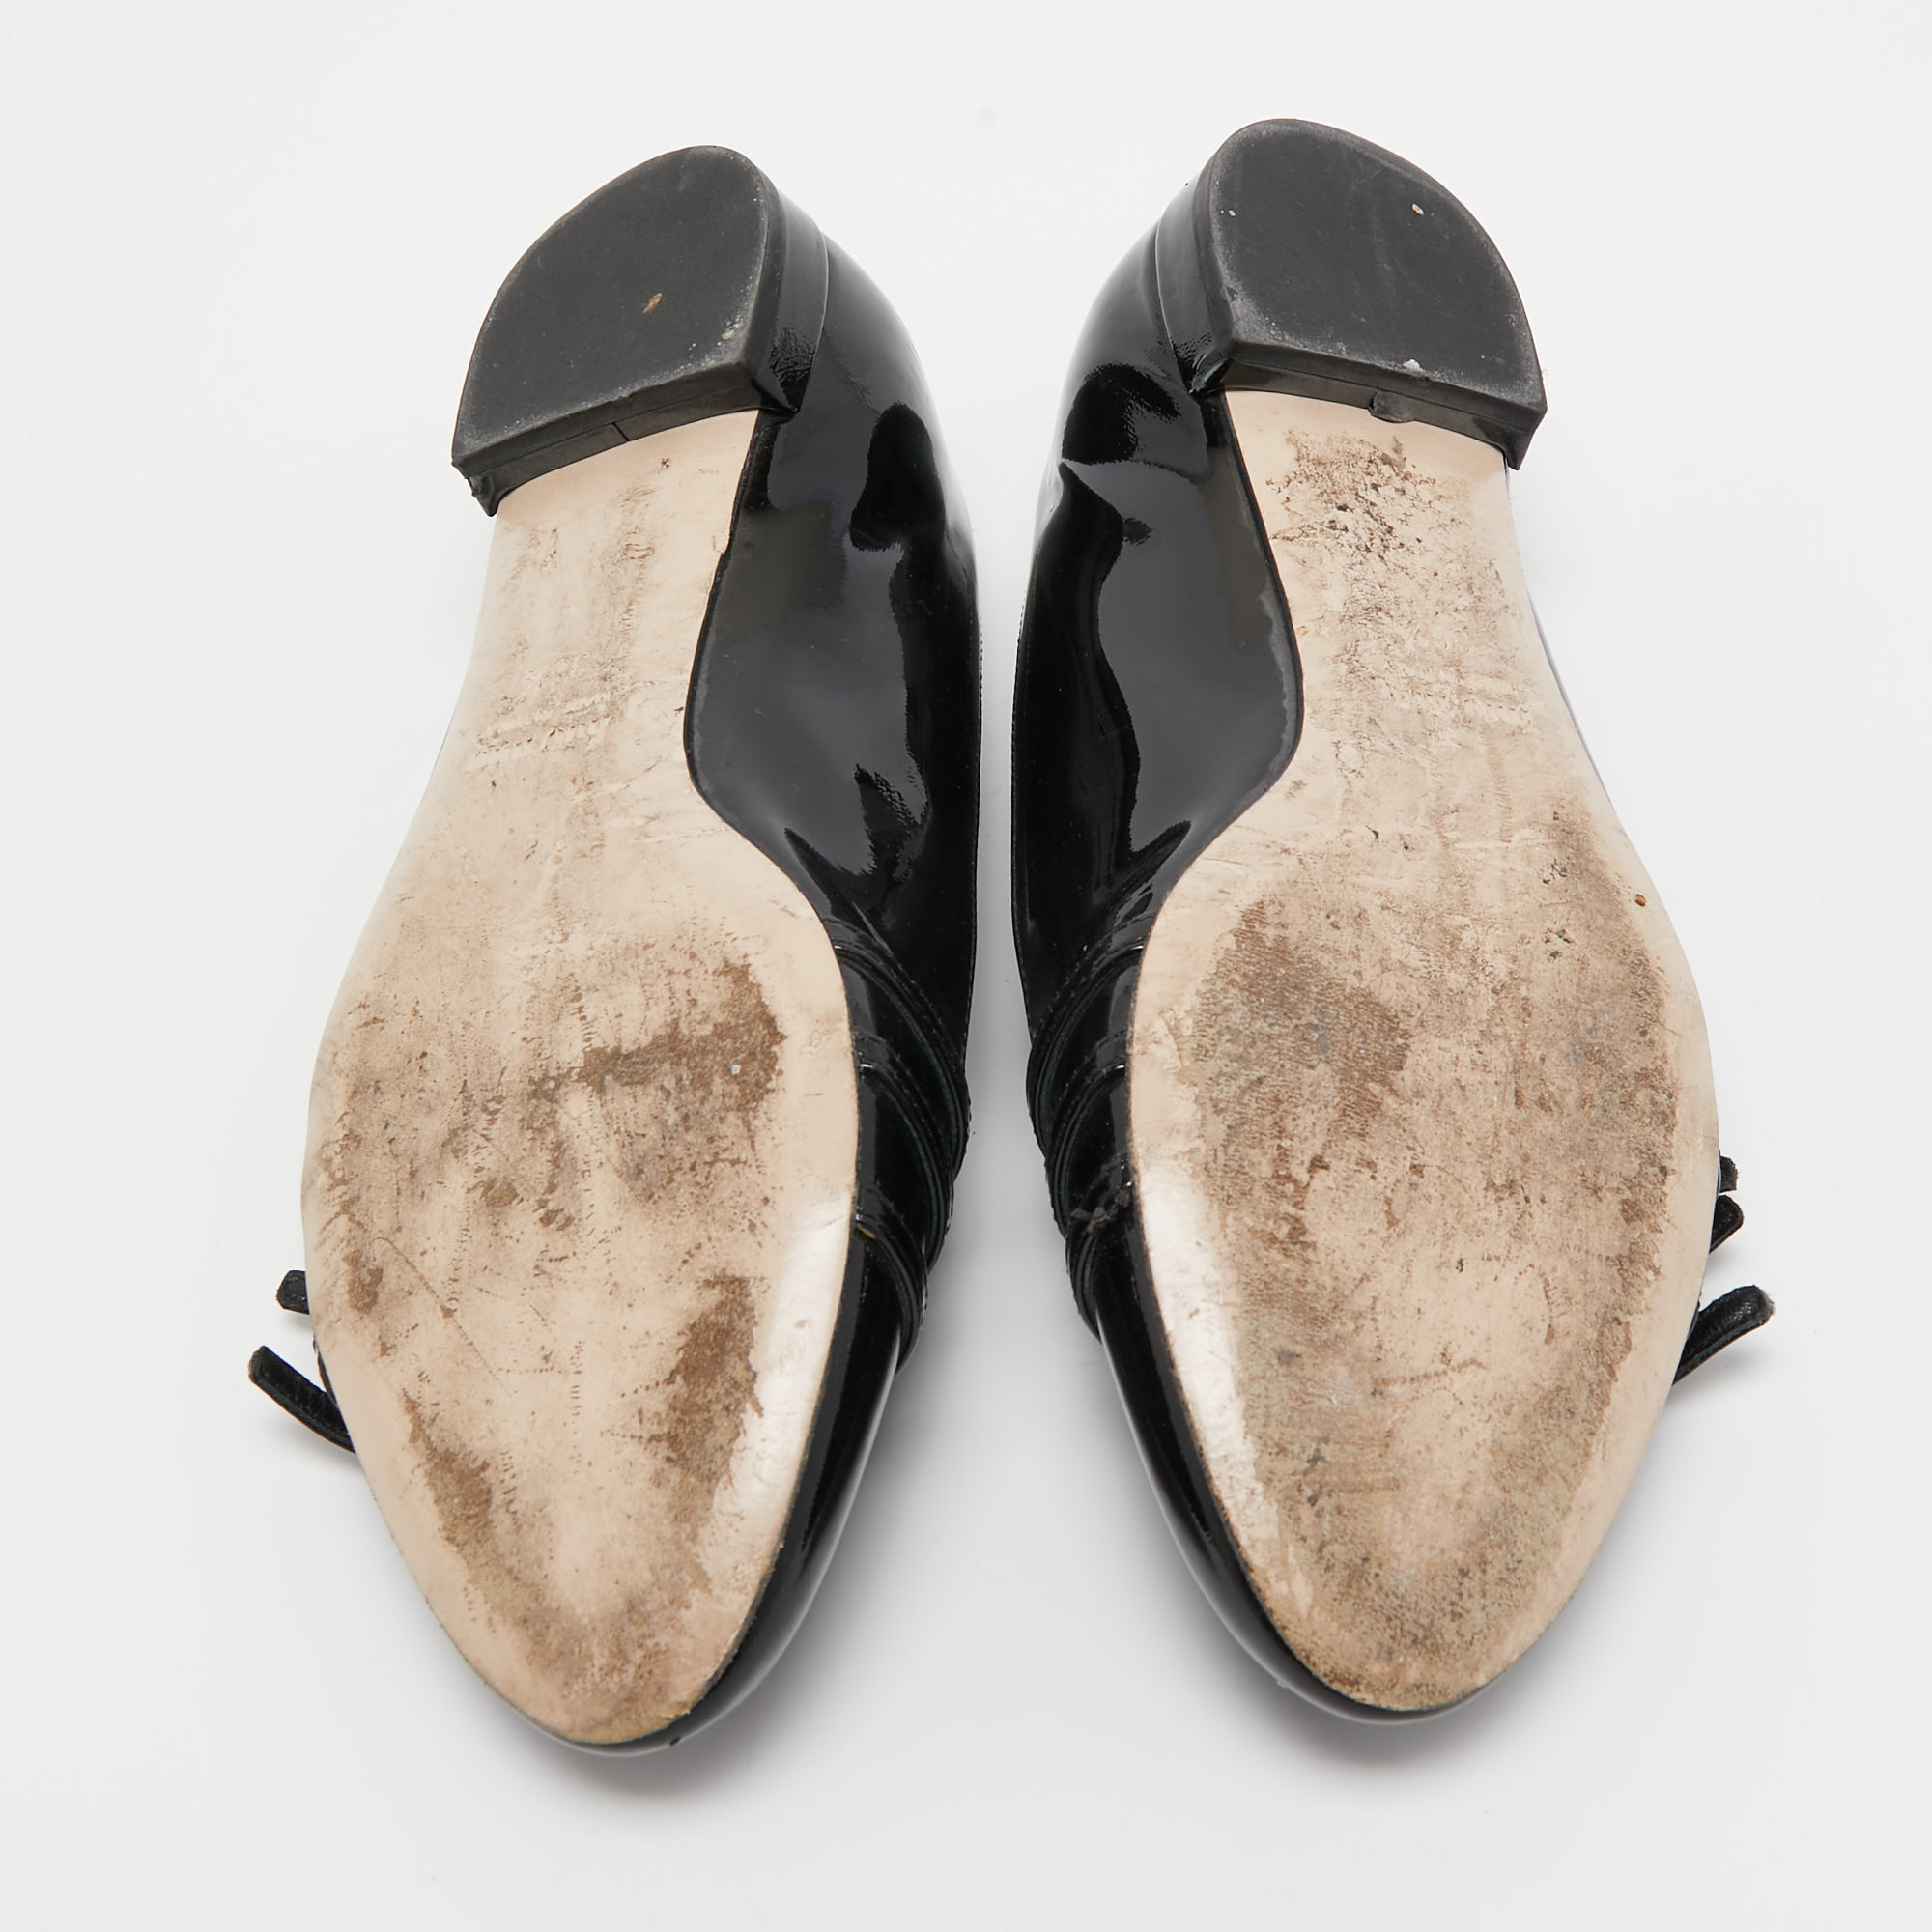 Miu Miu Black Patent Leather Trio Buckle Embellished Ballet Flats Size 36.5